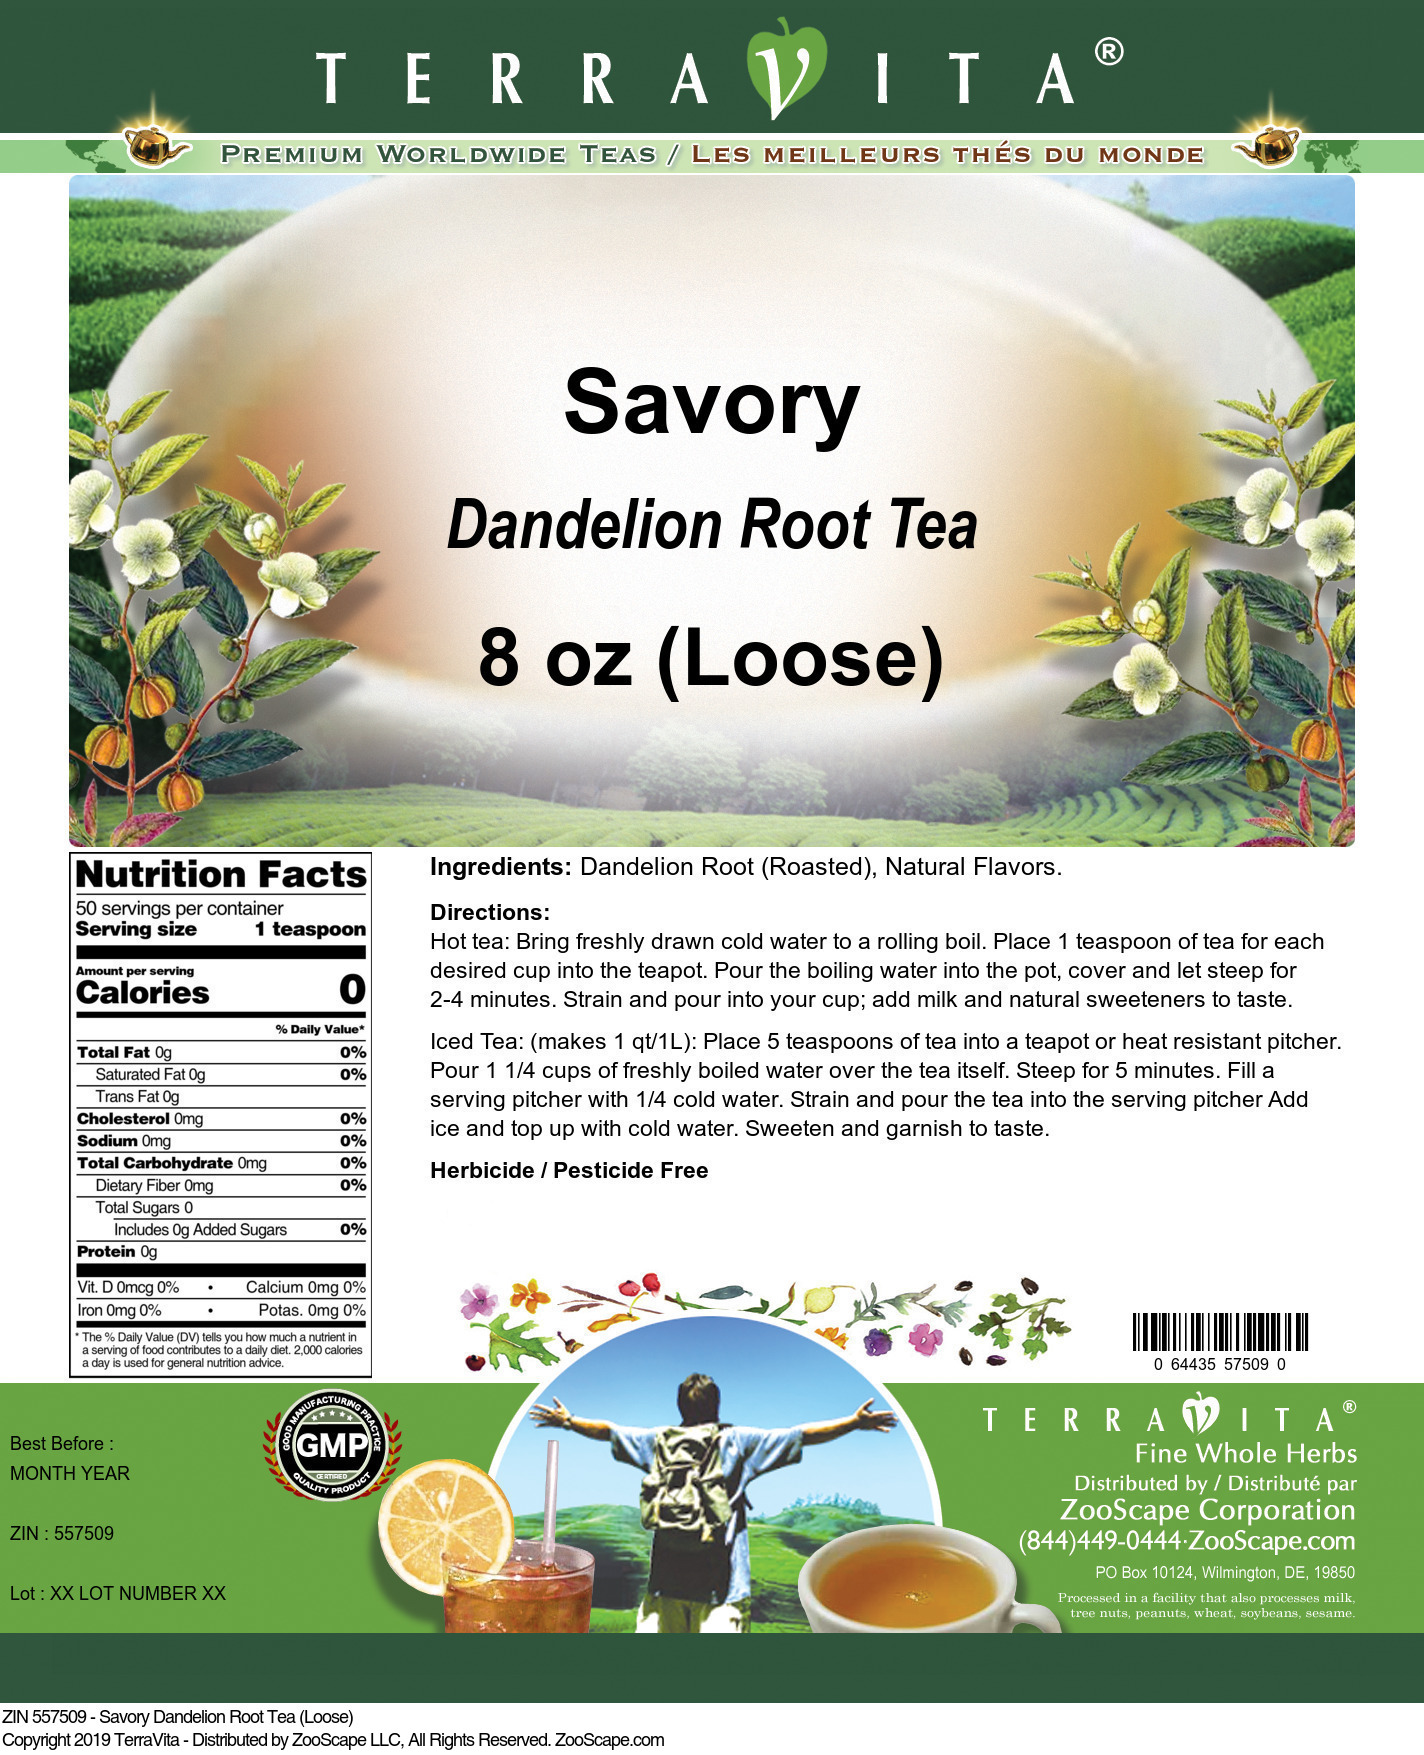 Savory Dandelion Root Tea (Loose) - Label